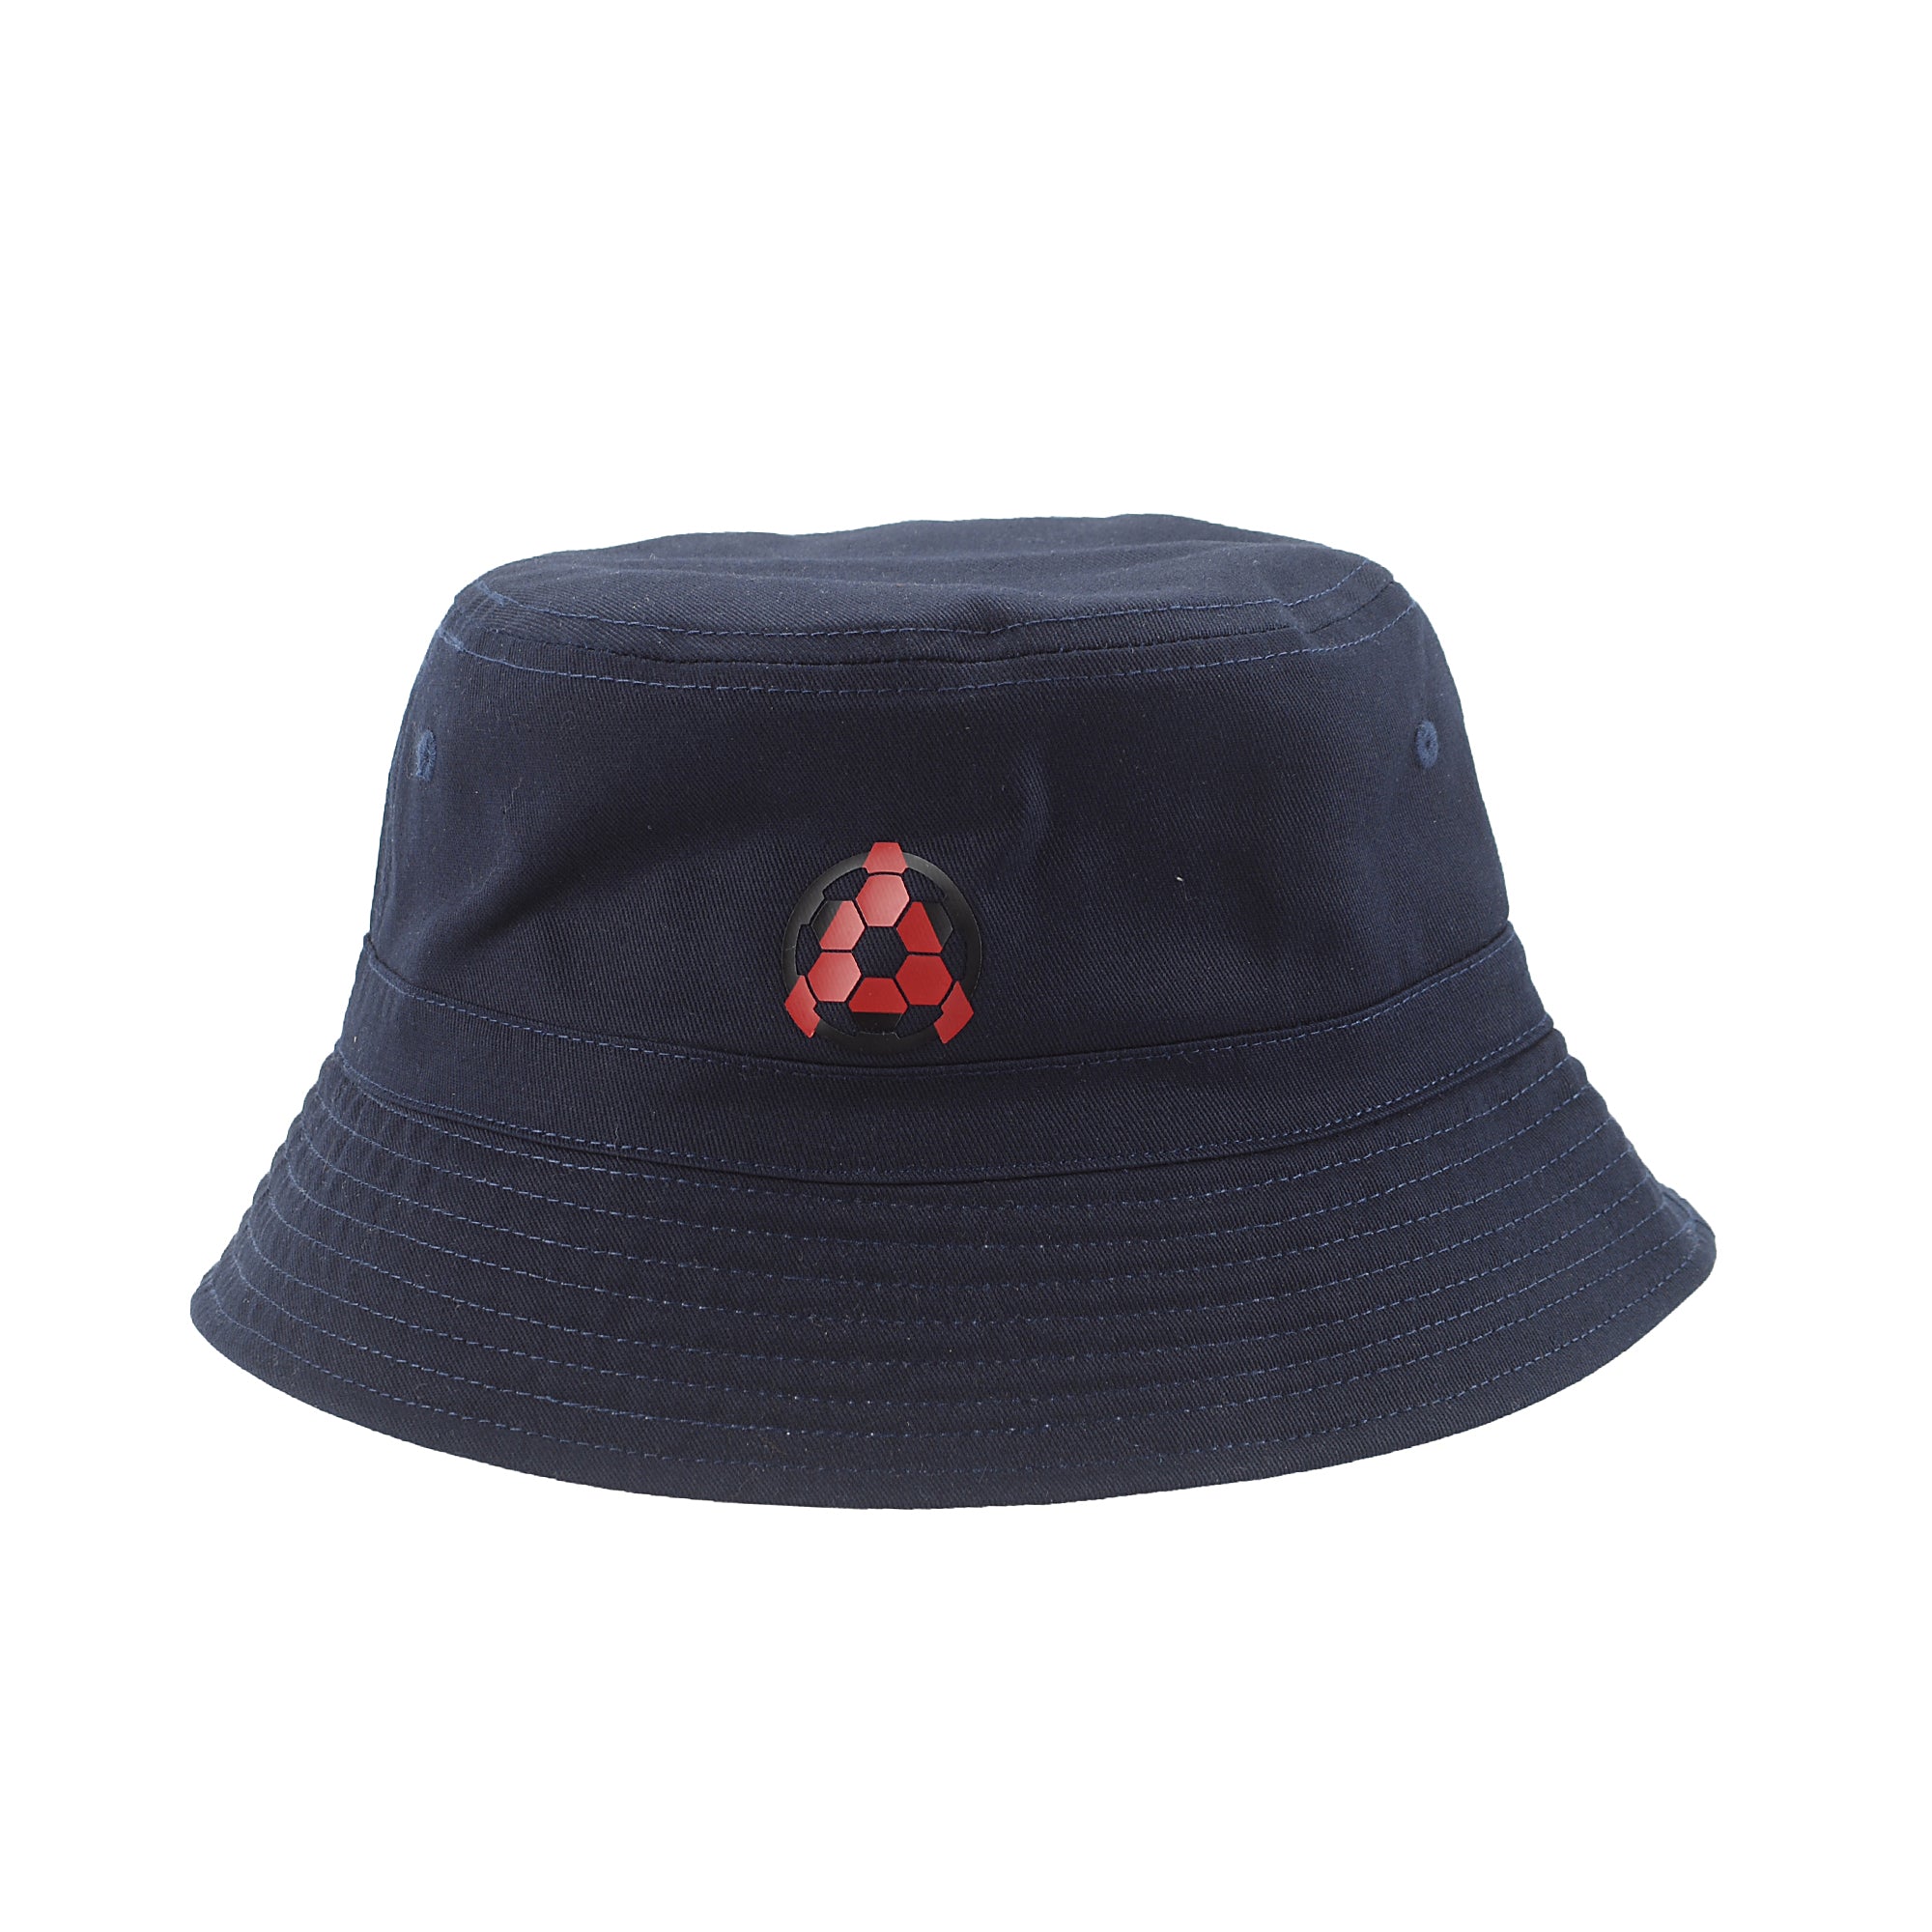 Bucket hat AFCA navy-rood bal logo